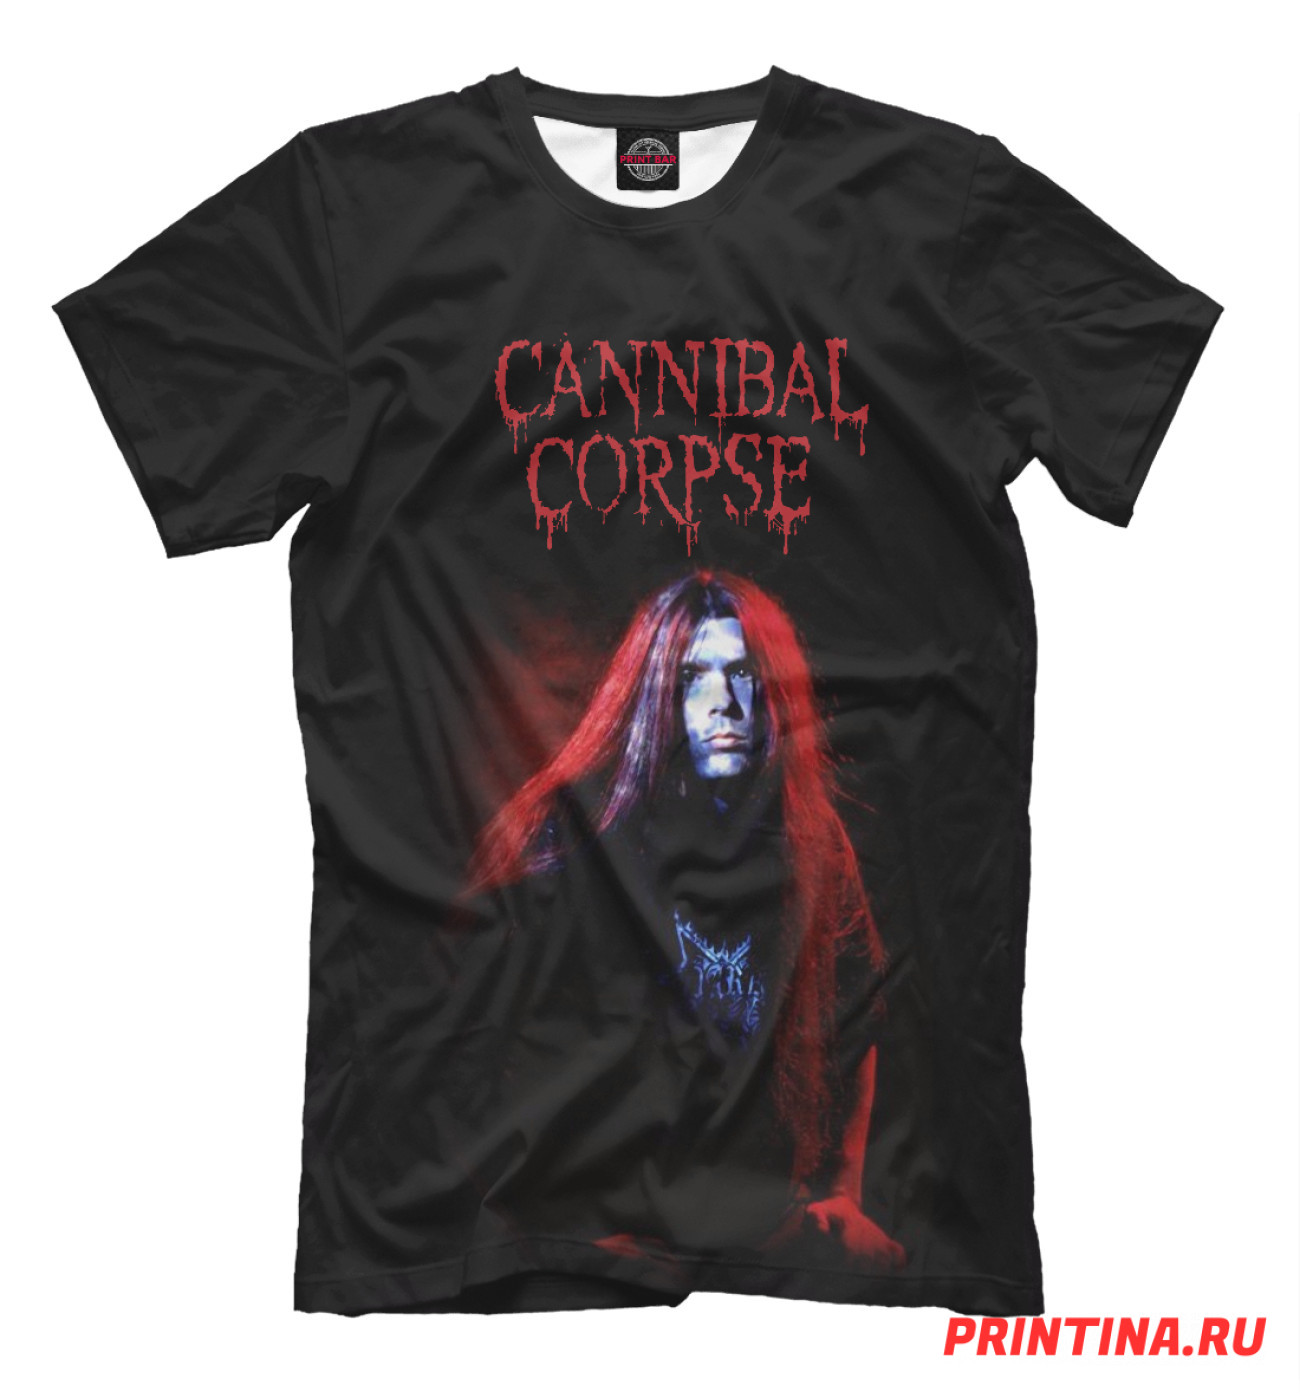 Мужская Футболка Cannibal Corpse, артикул: CCR-512520-fut-2